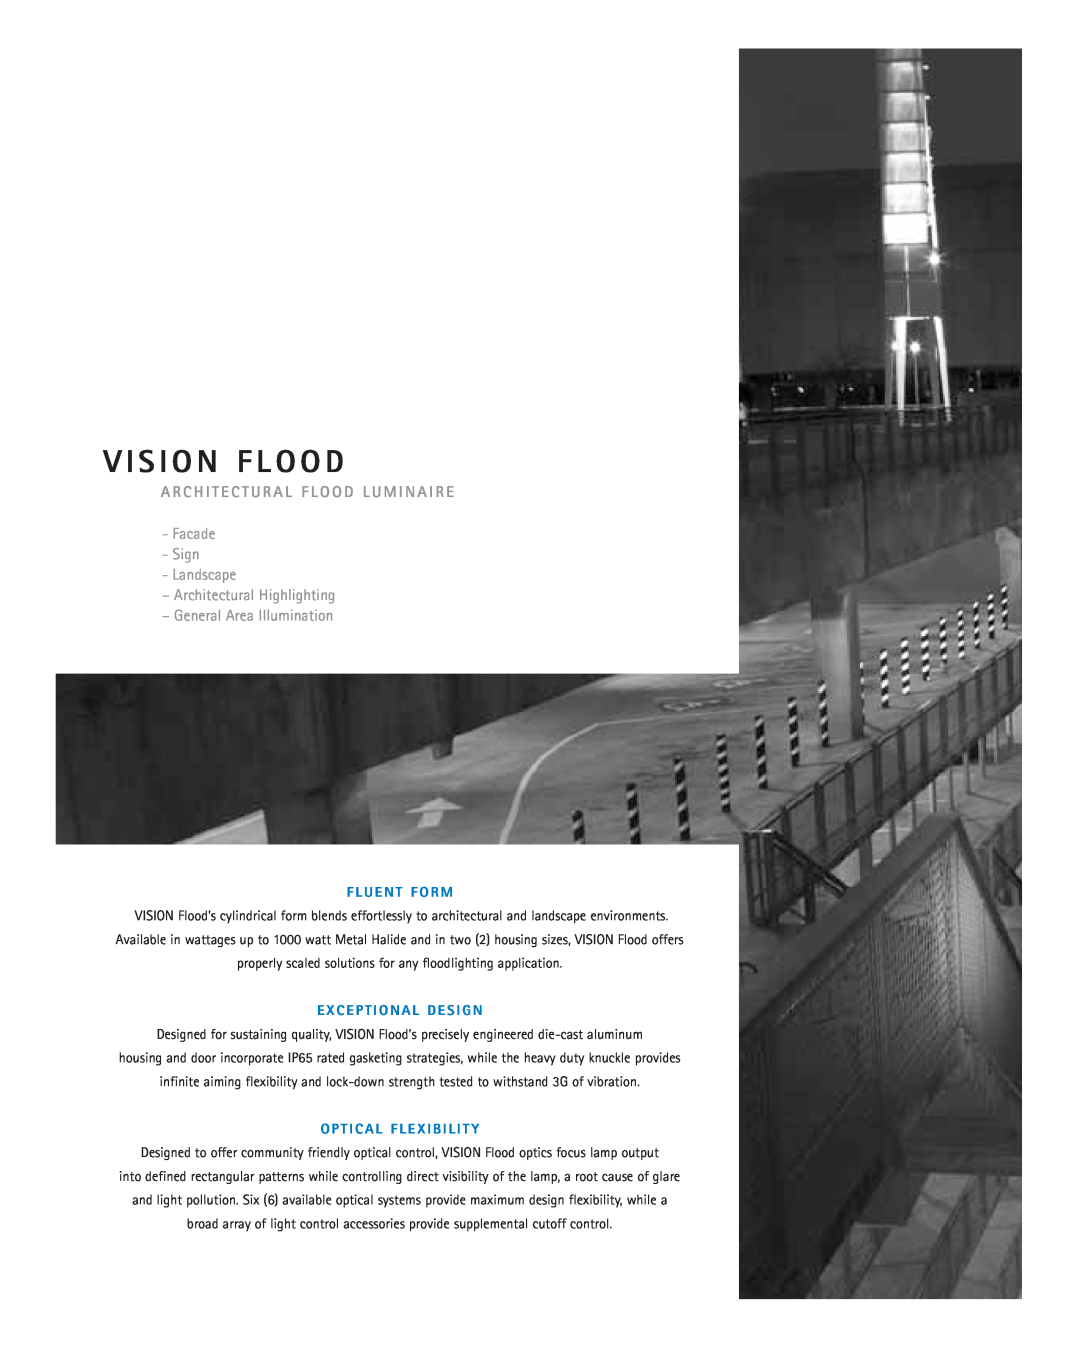 Cooper Lighting Vision Flood V I S I O N F L O O D, Facade Sign Landscape -Architectural Highlighting, F L U E N T F O R M 